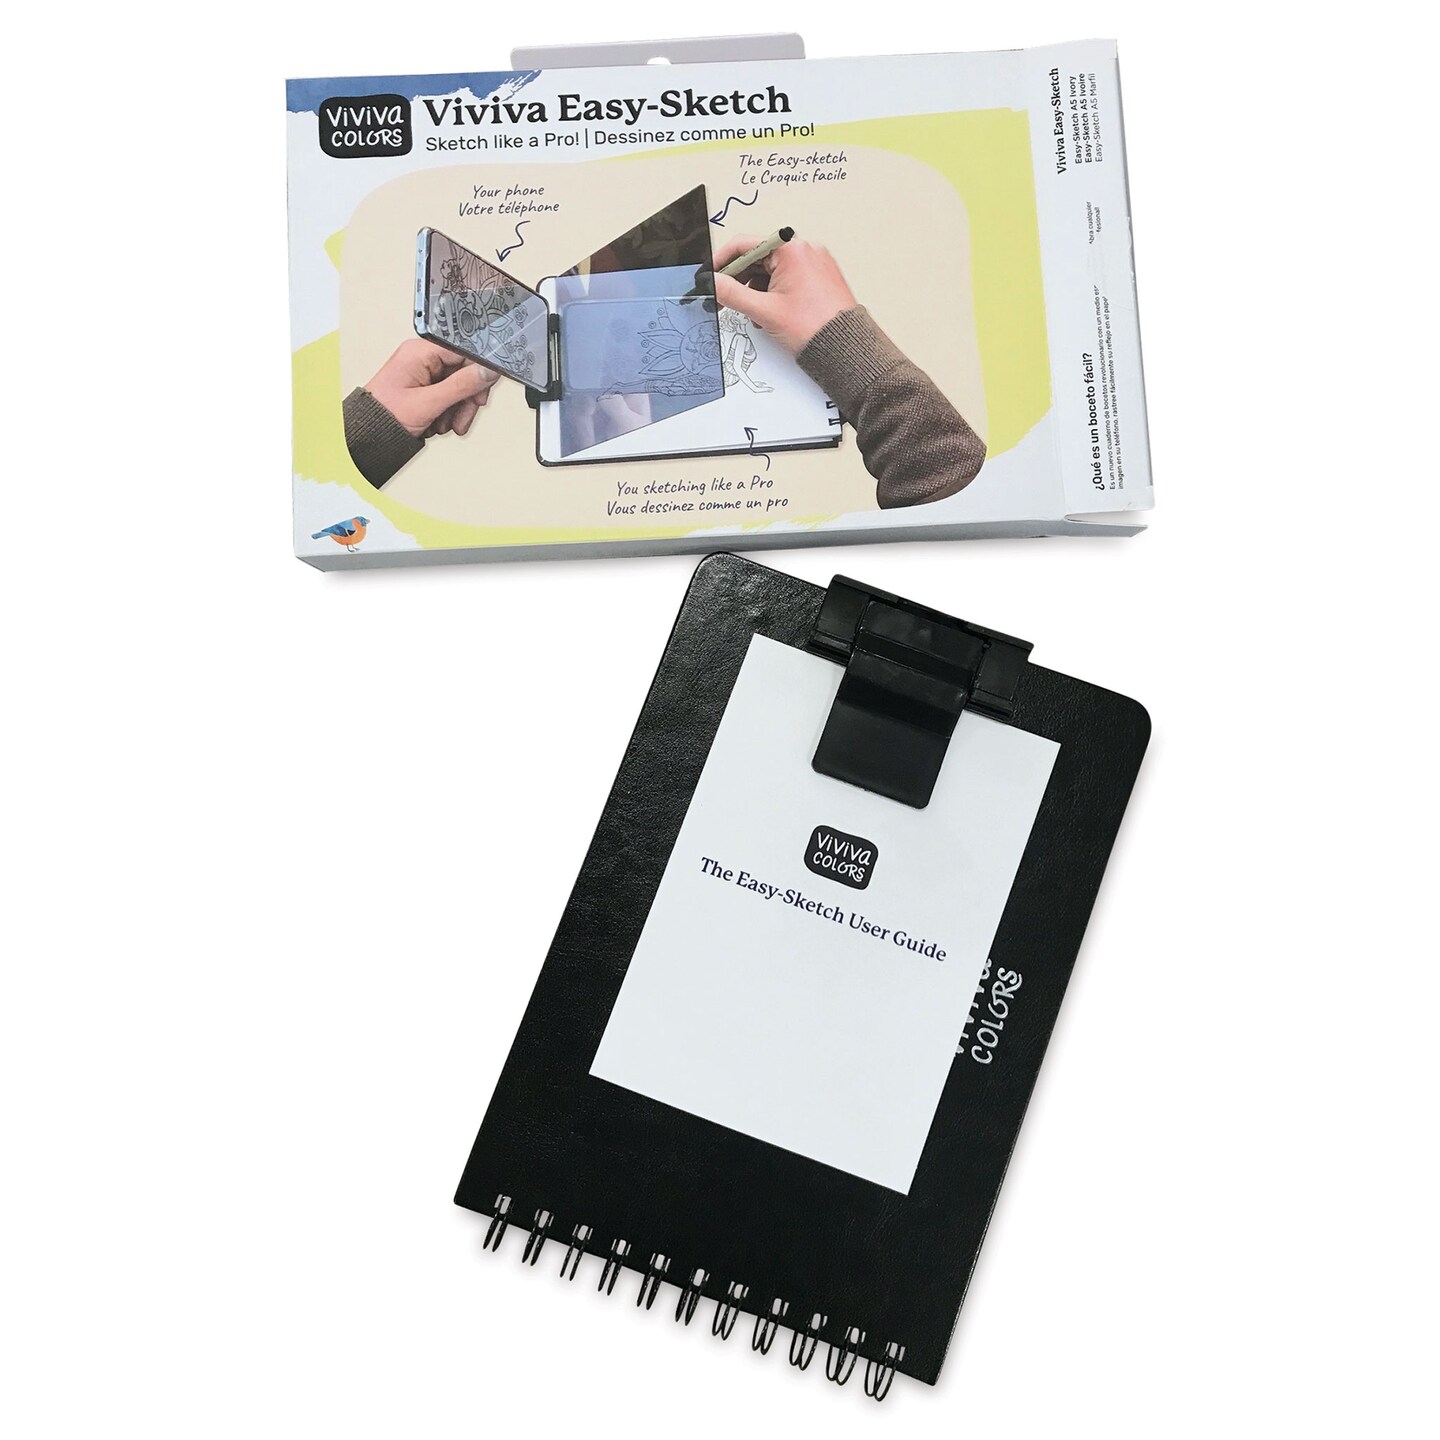 Viviva Easy-Sketch Book and Digital Projector Set